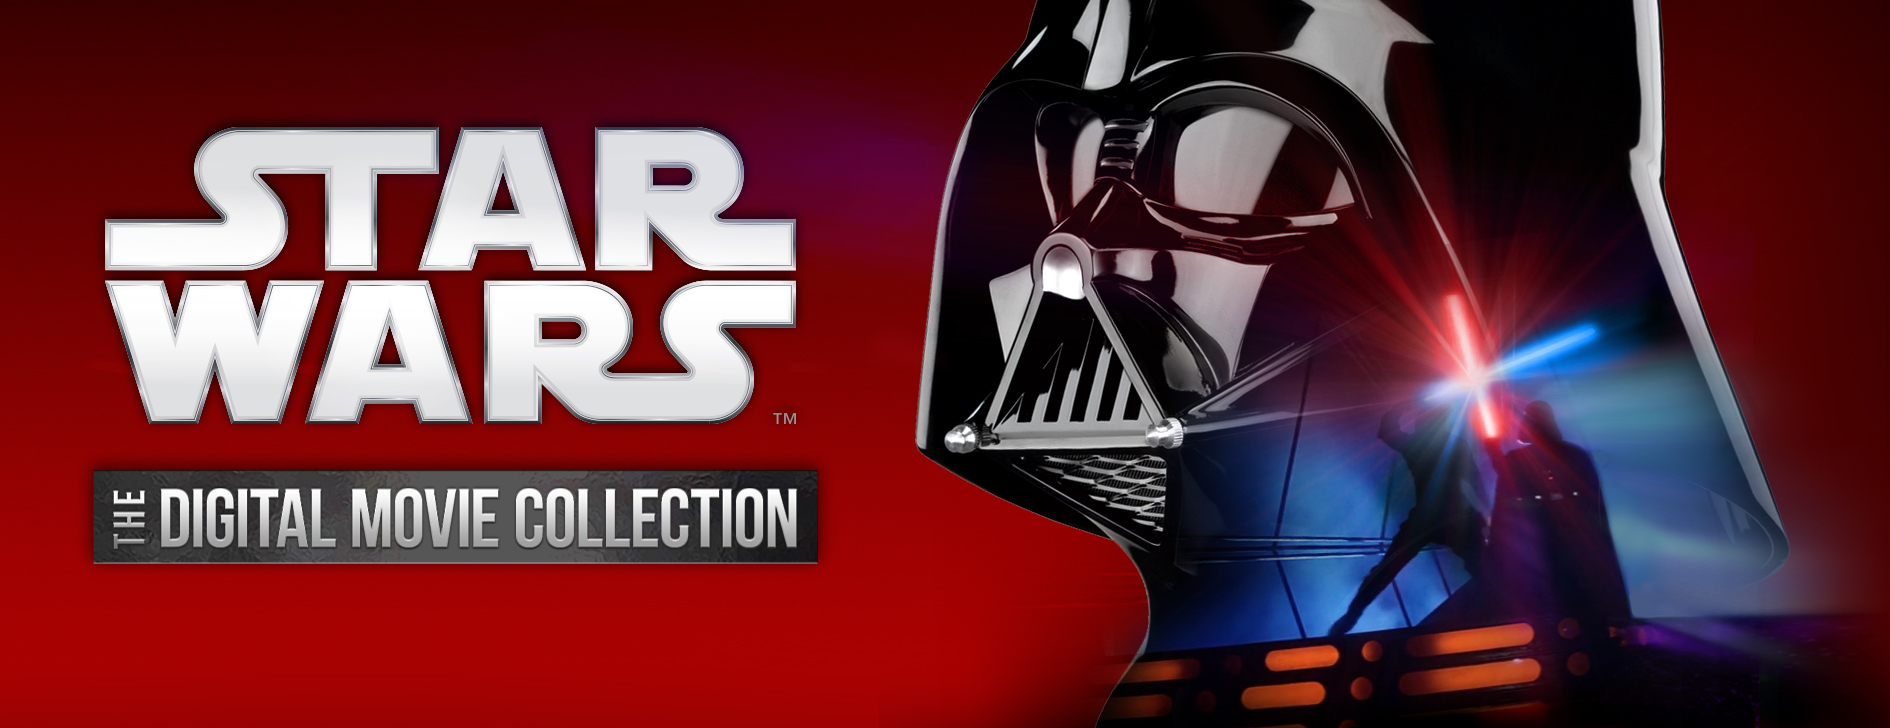 Star Wars Saga Now Available on Digital HD